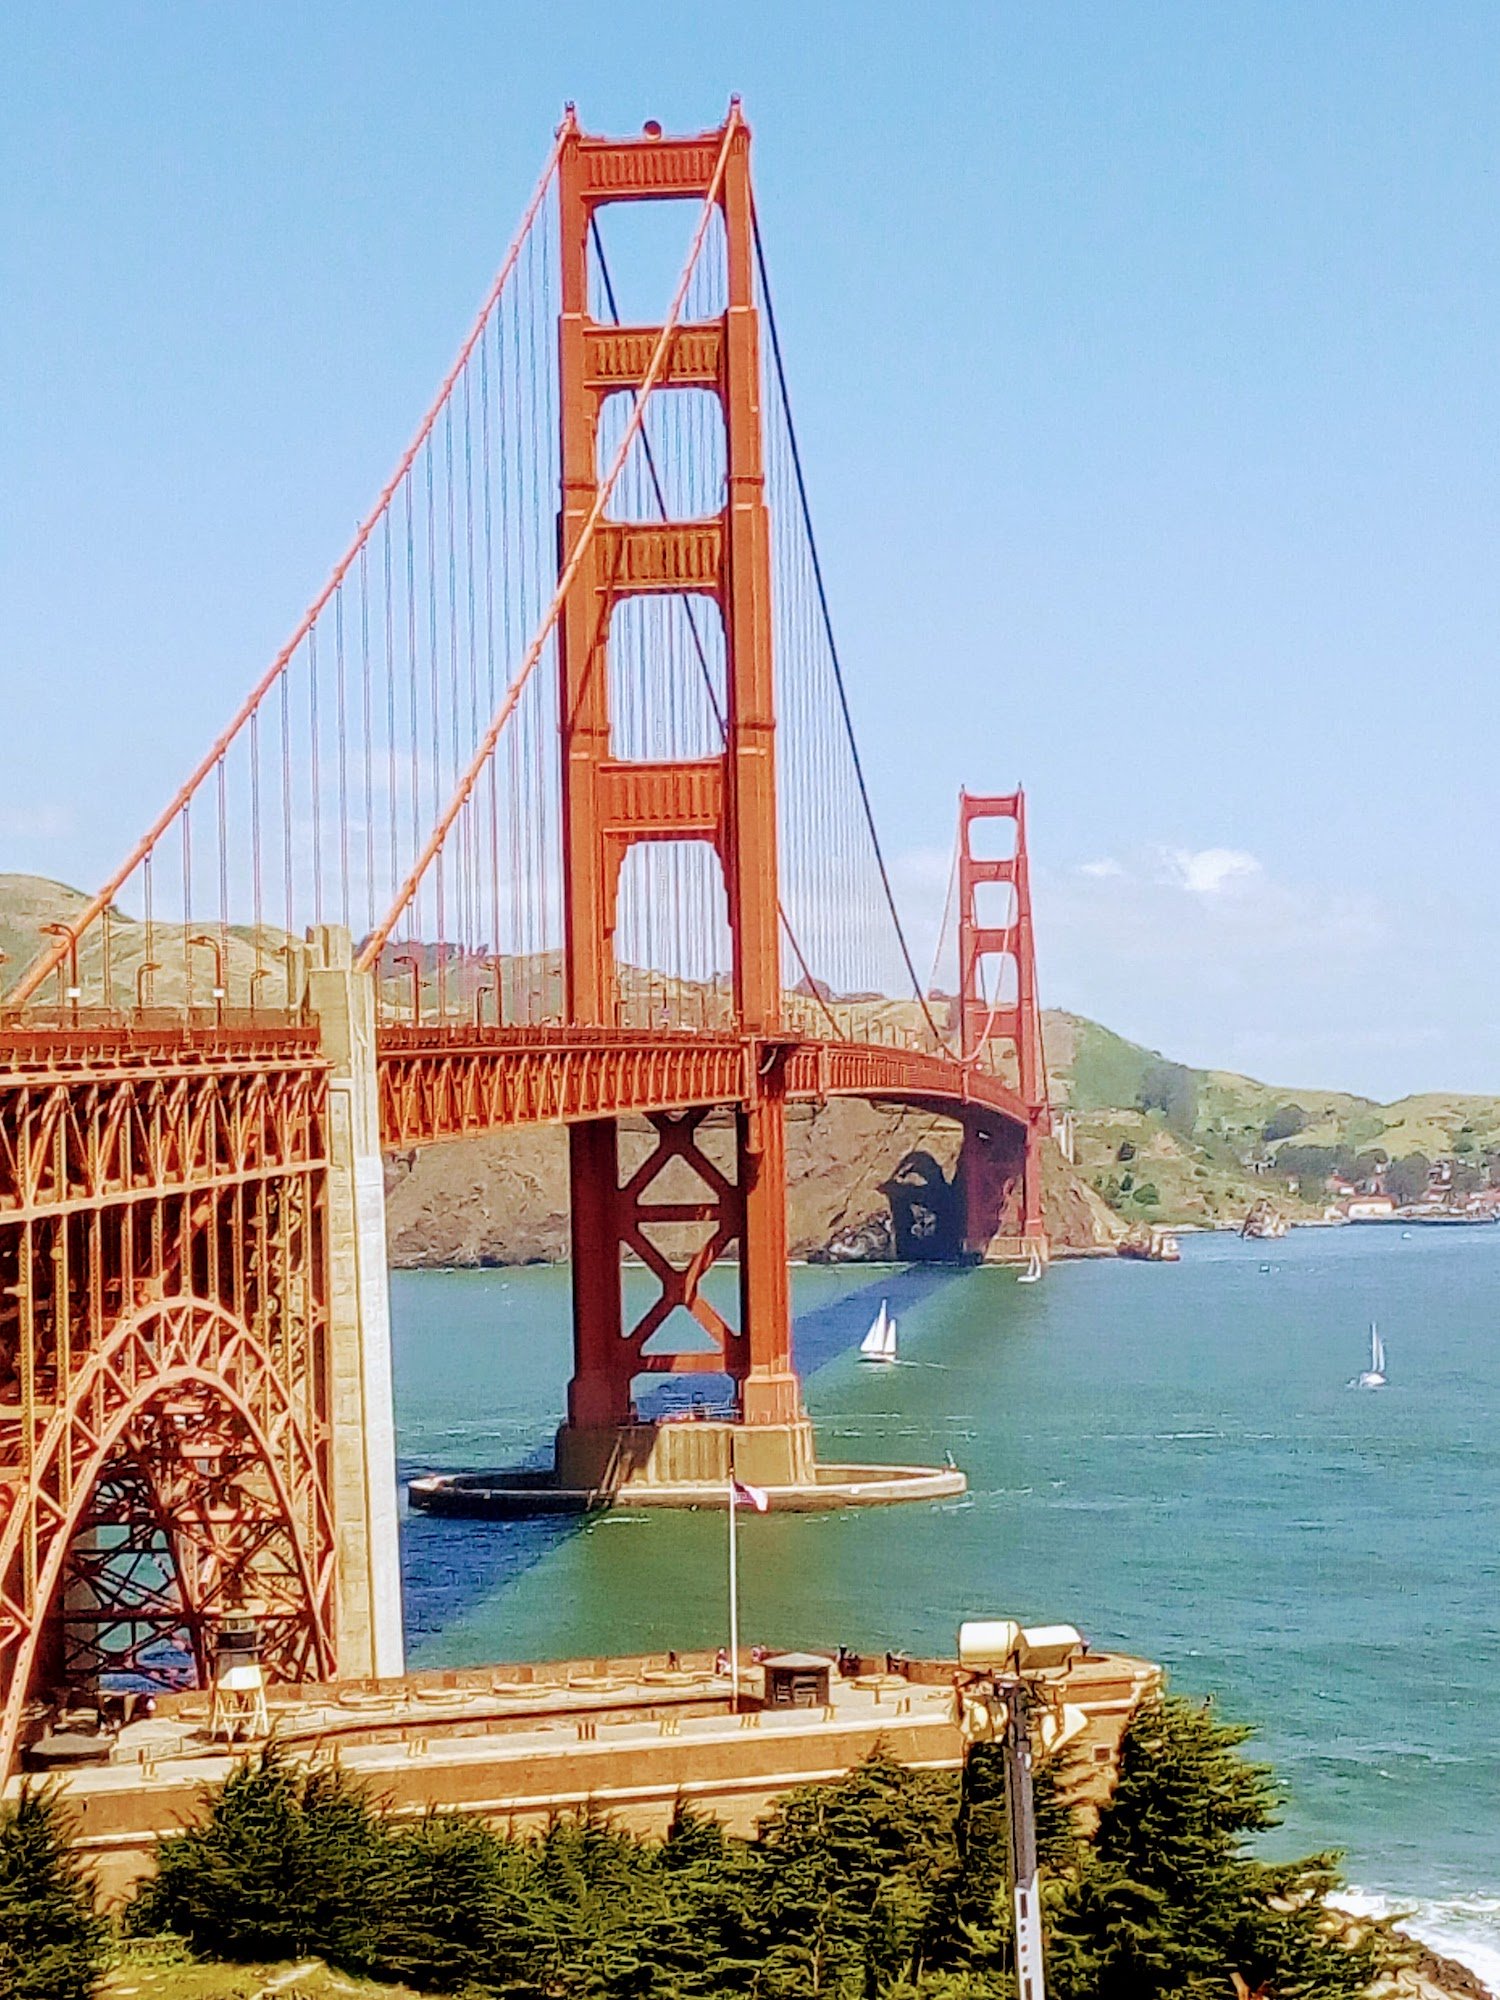 San Francisco Bay Area - the Bridge